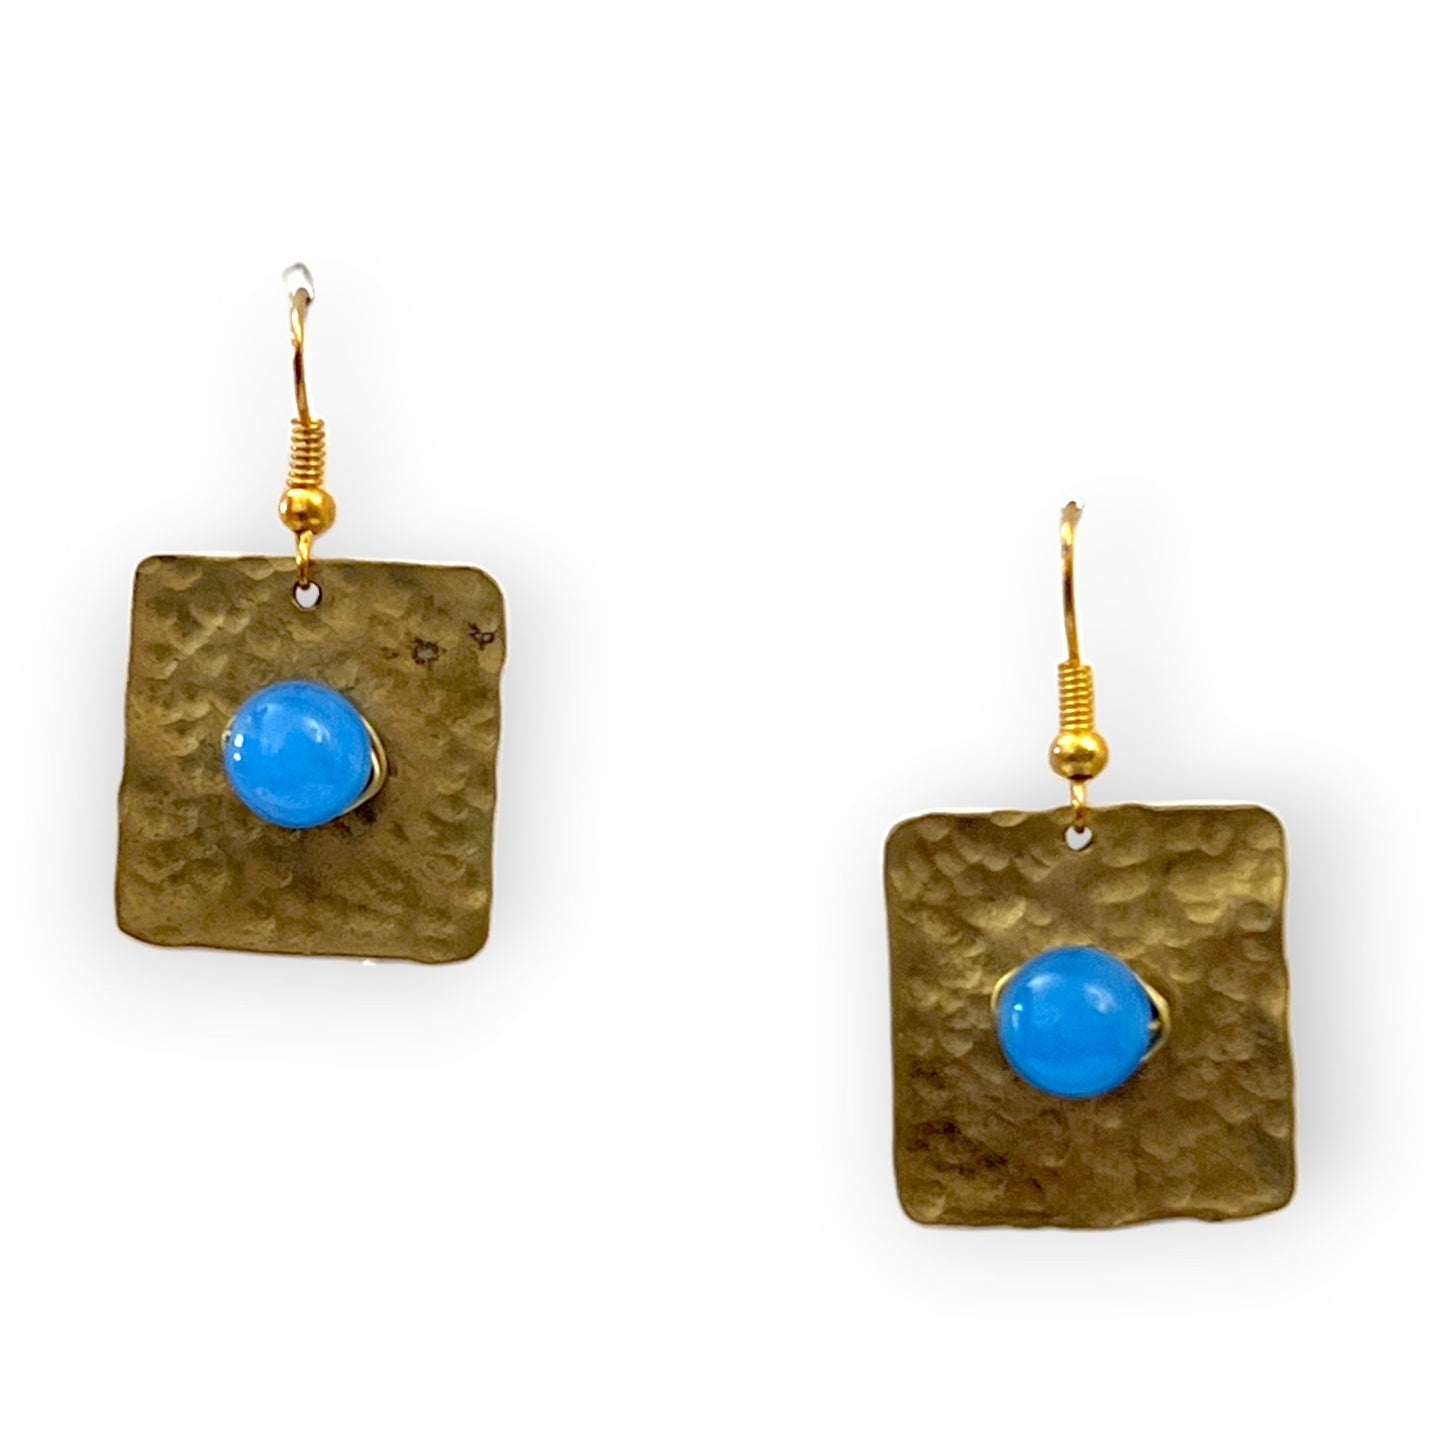 Square drop earrings with pop of blue gemstone - Sundara Joon